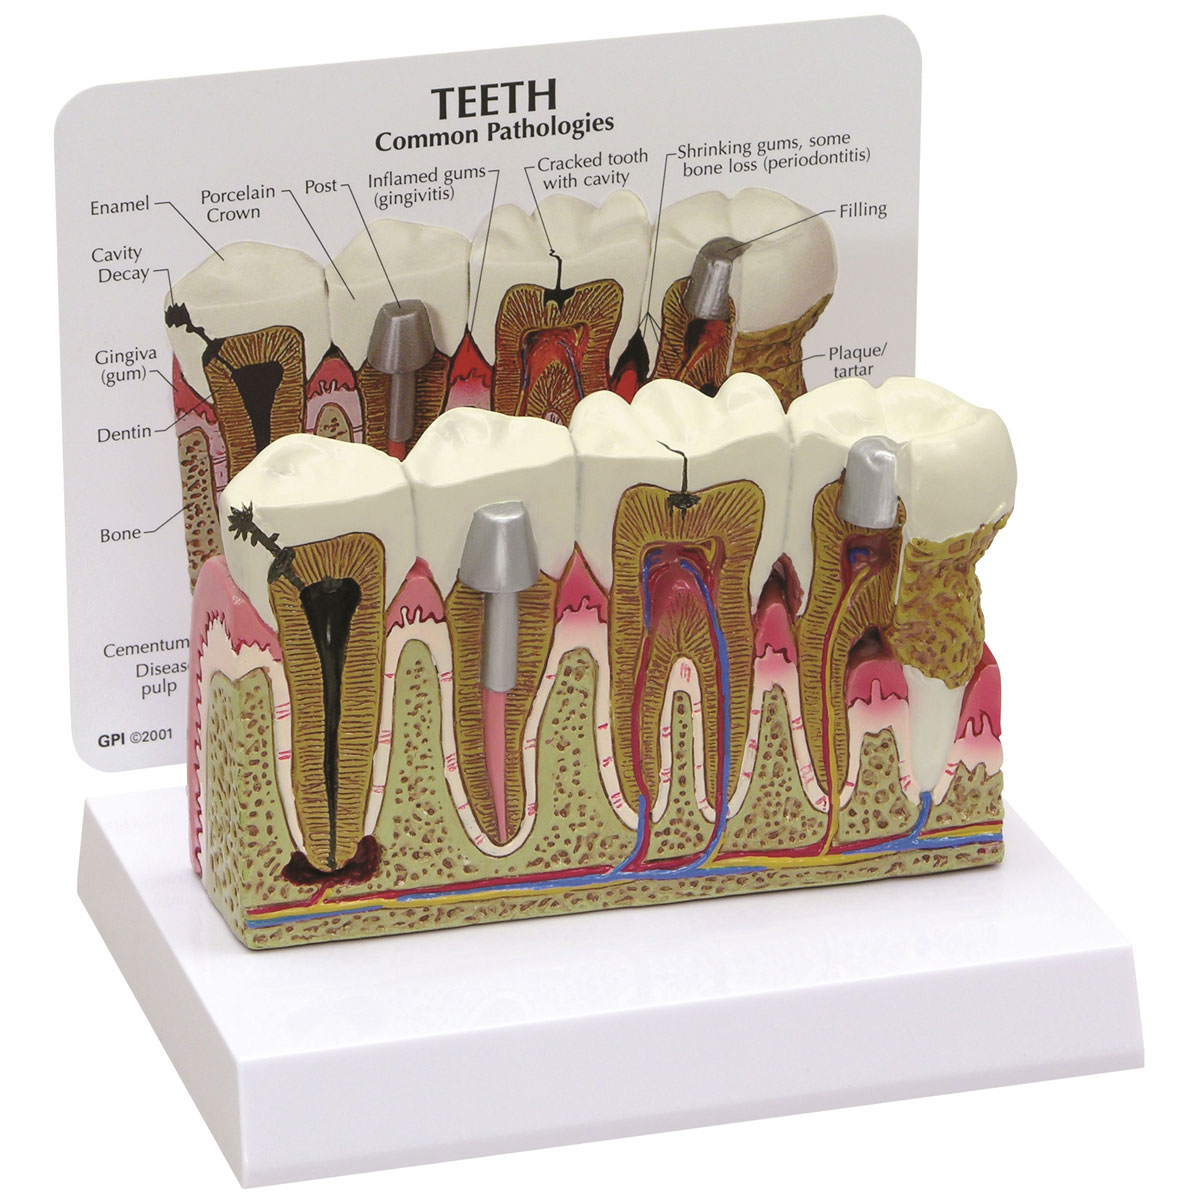 Teeth Model - 1019539 - 2860 - Anatomical Tooth Models - Anatomy